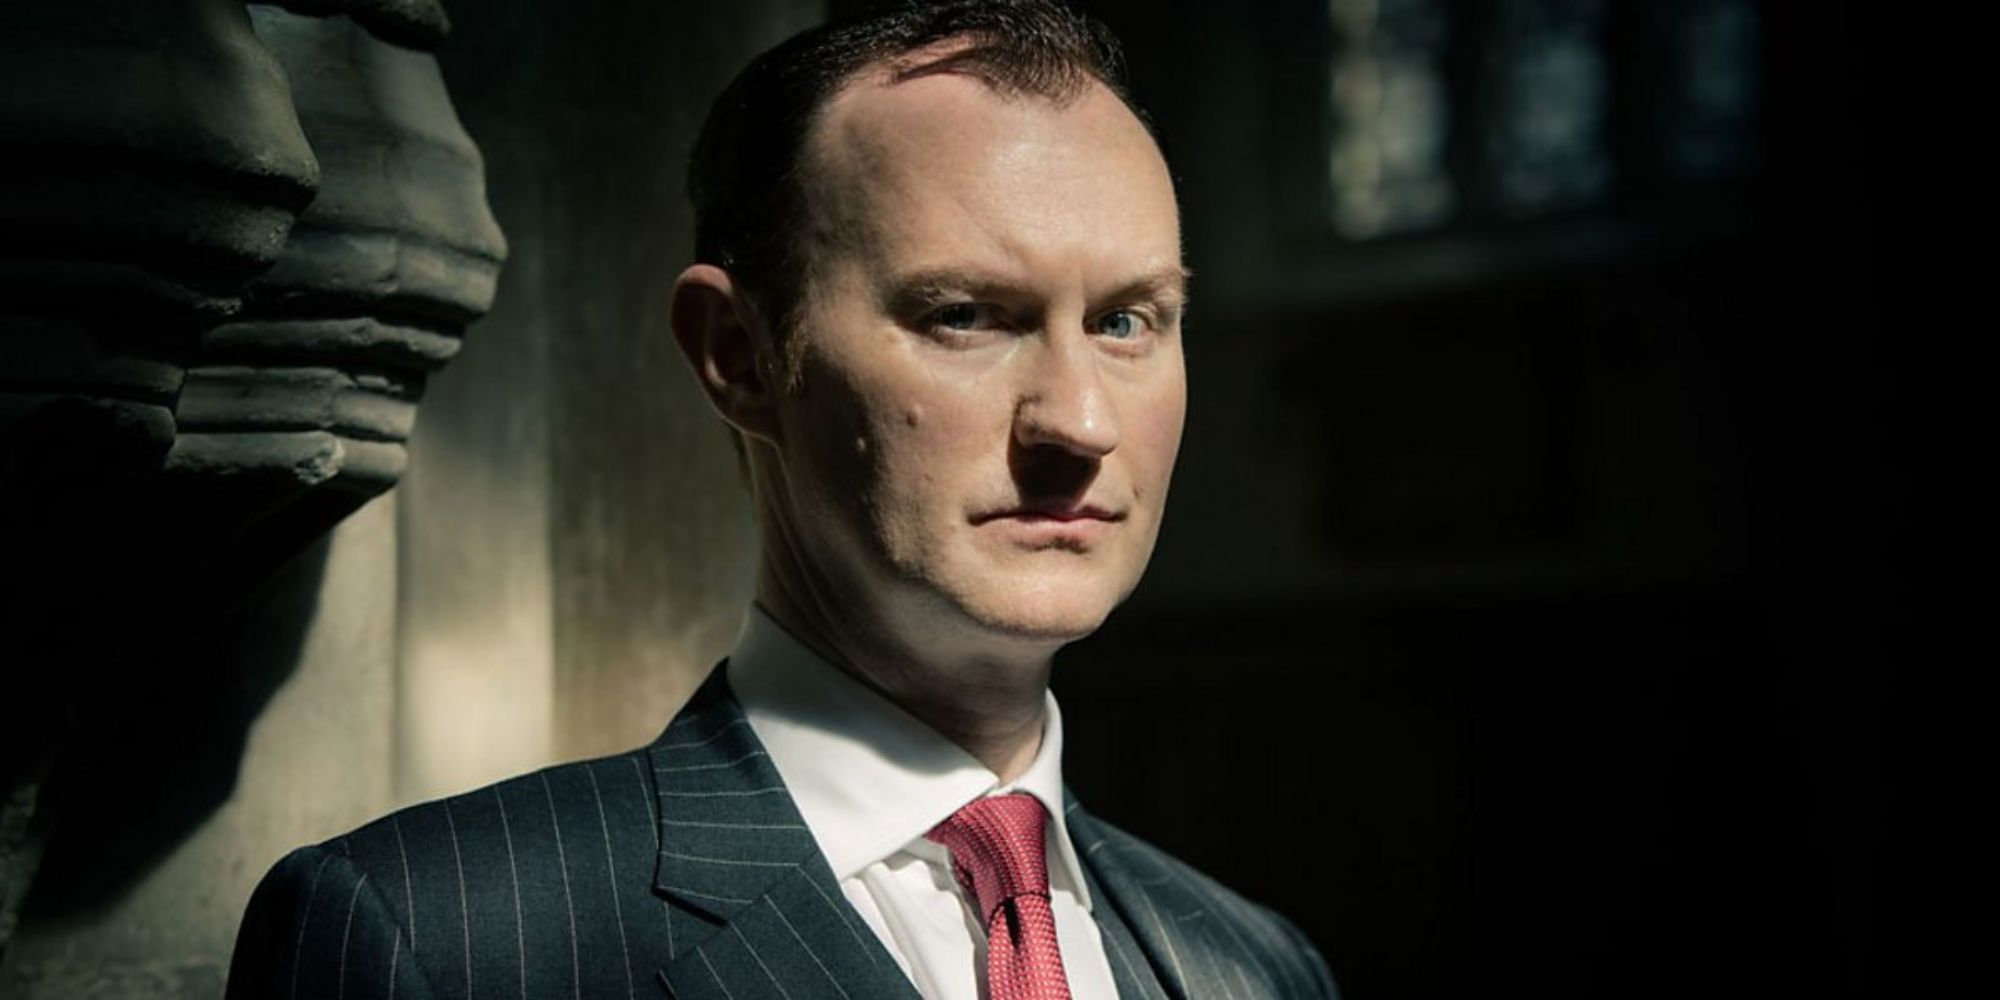 From 'Sherlock' TV series: Mycroft Holmes played by Mark Gatiss